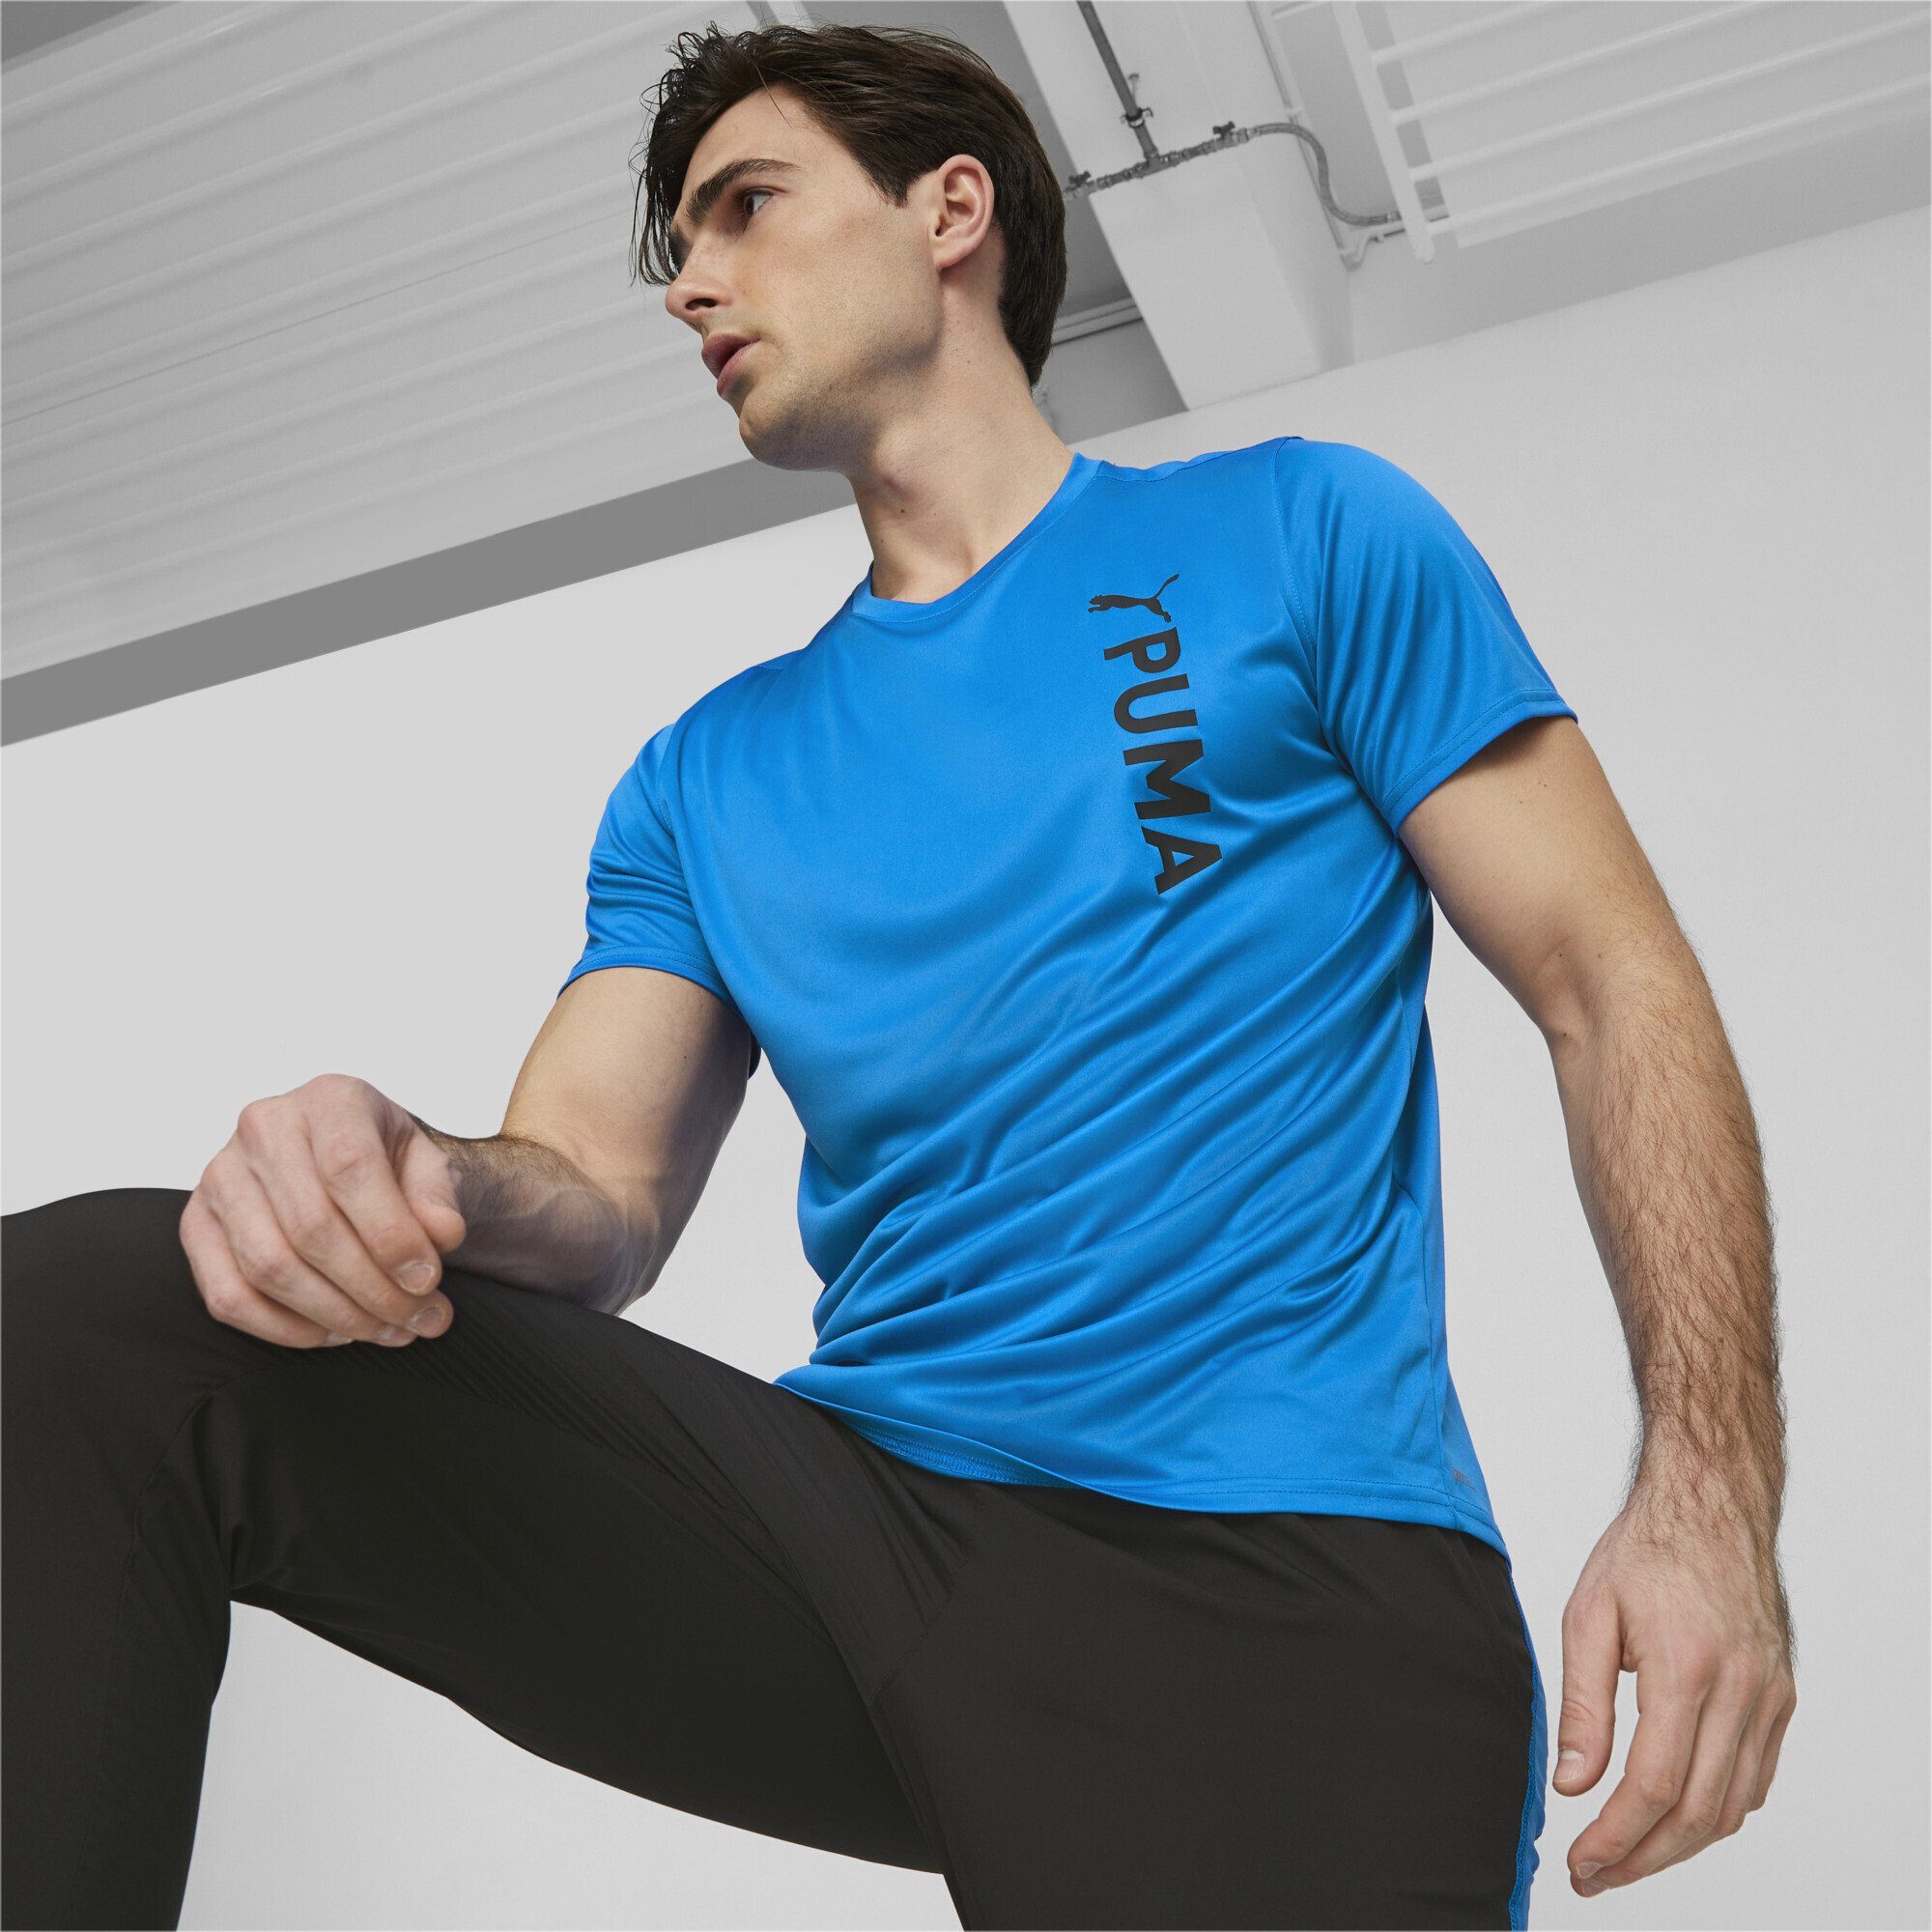 PUMA Trainings-T-Shirt PUMA Trainingsshirt links Brust auf FIT Herren, Logo PUMA der